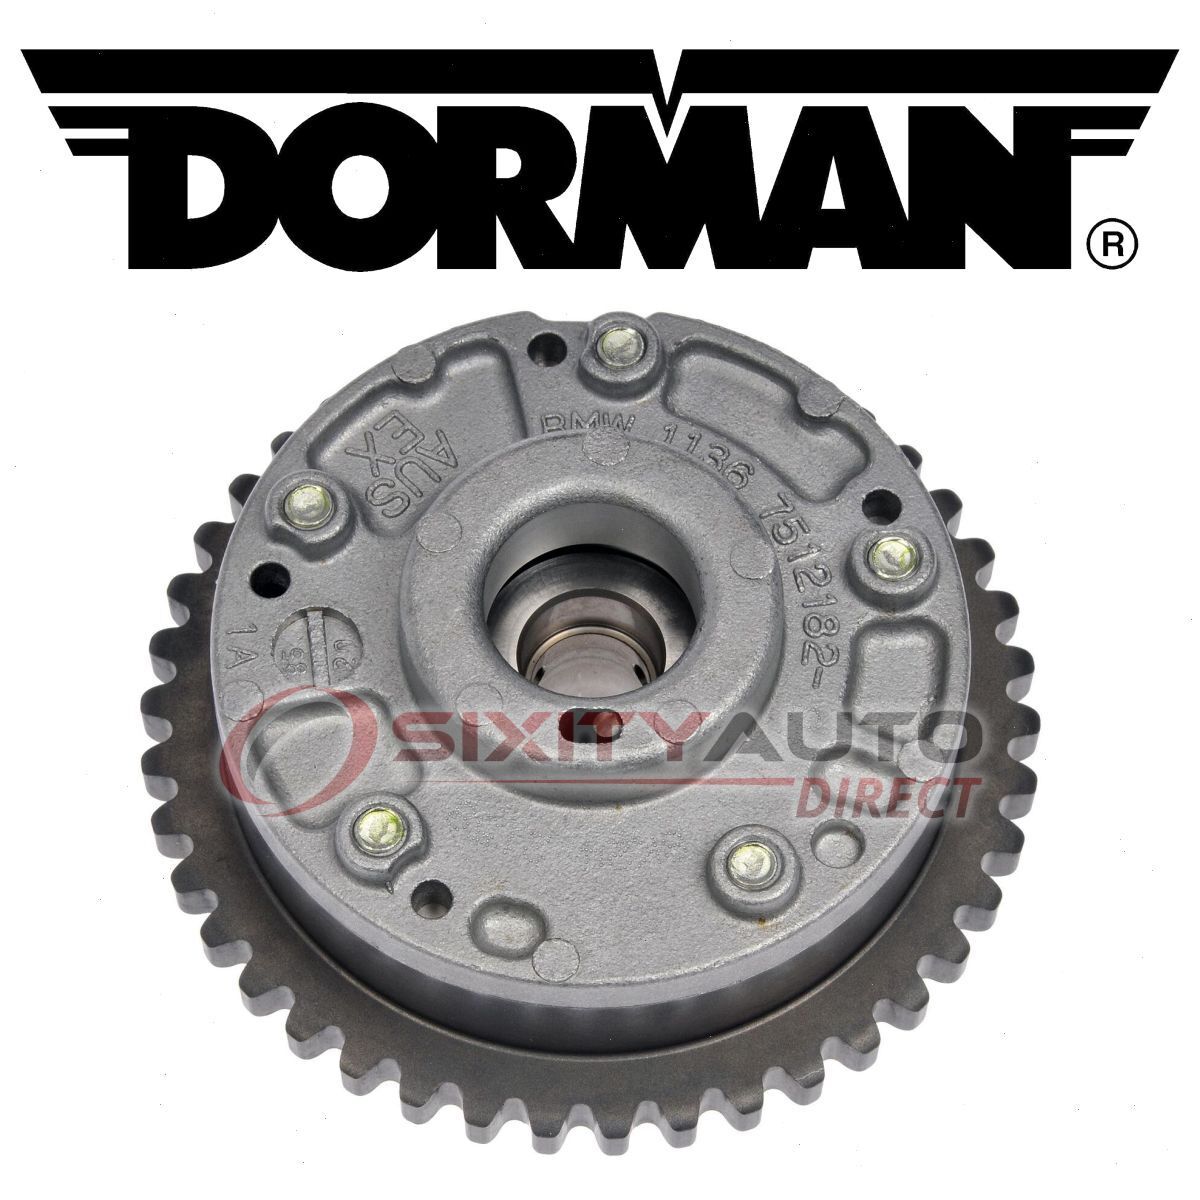 Dorman Exhaust Left Engine Variable Timing Sprocket for 2006-2011 BMW 650Ci ub